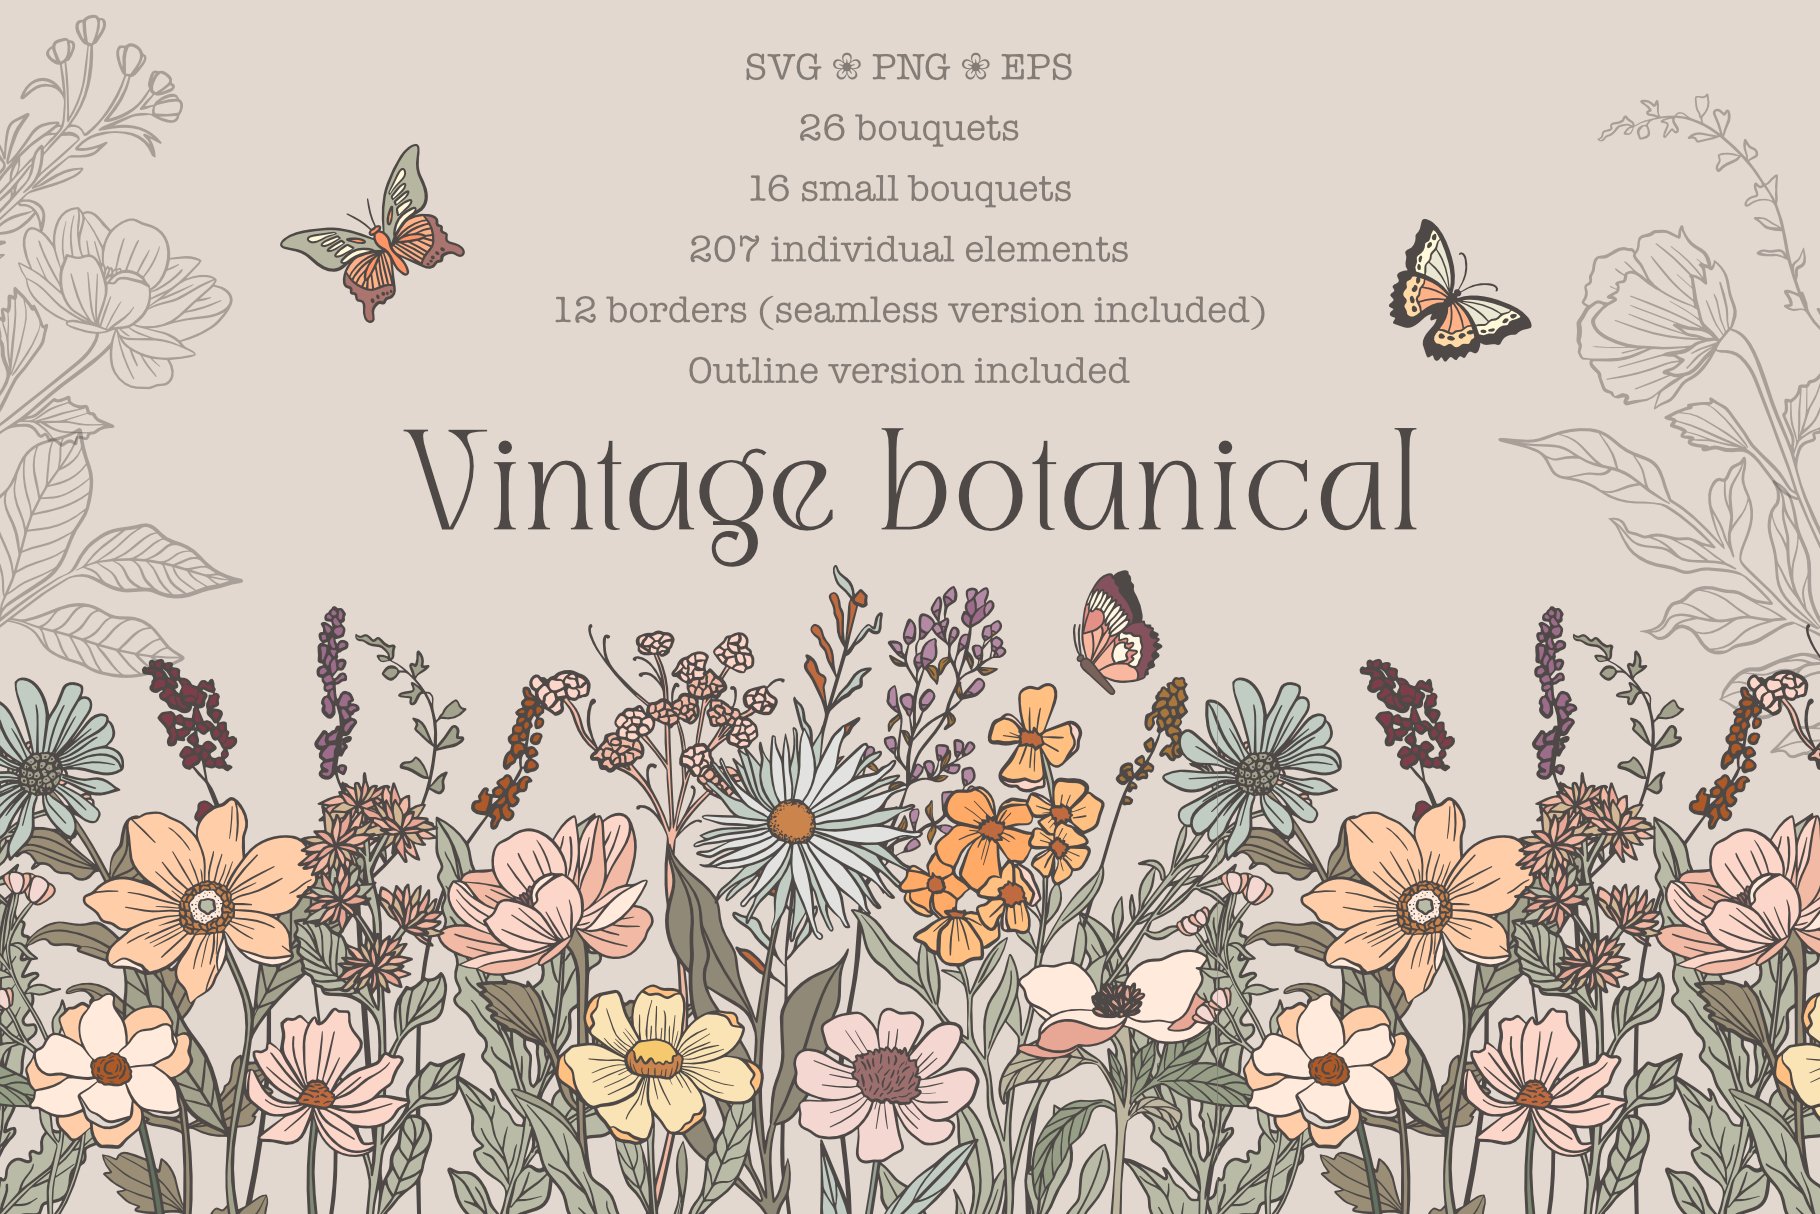 Boho aesthetic minimalism wild flowers - Vintage Flower - Sticker